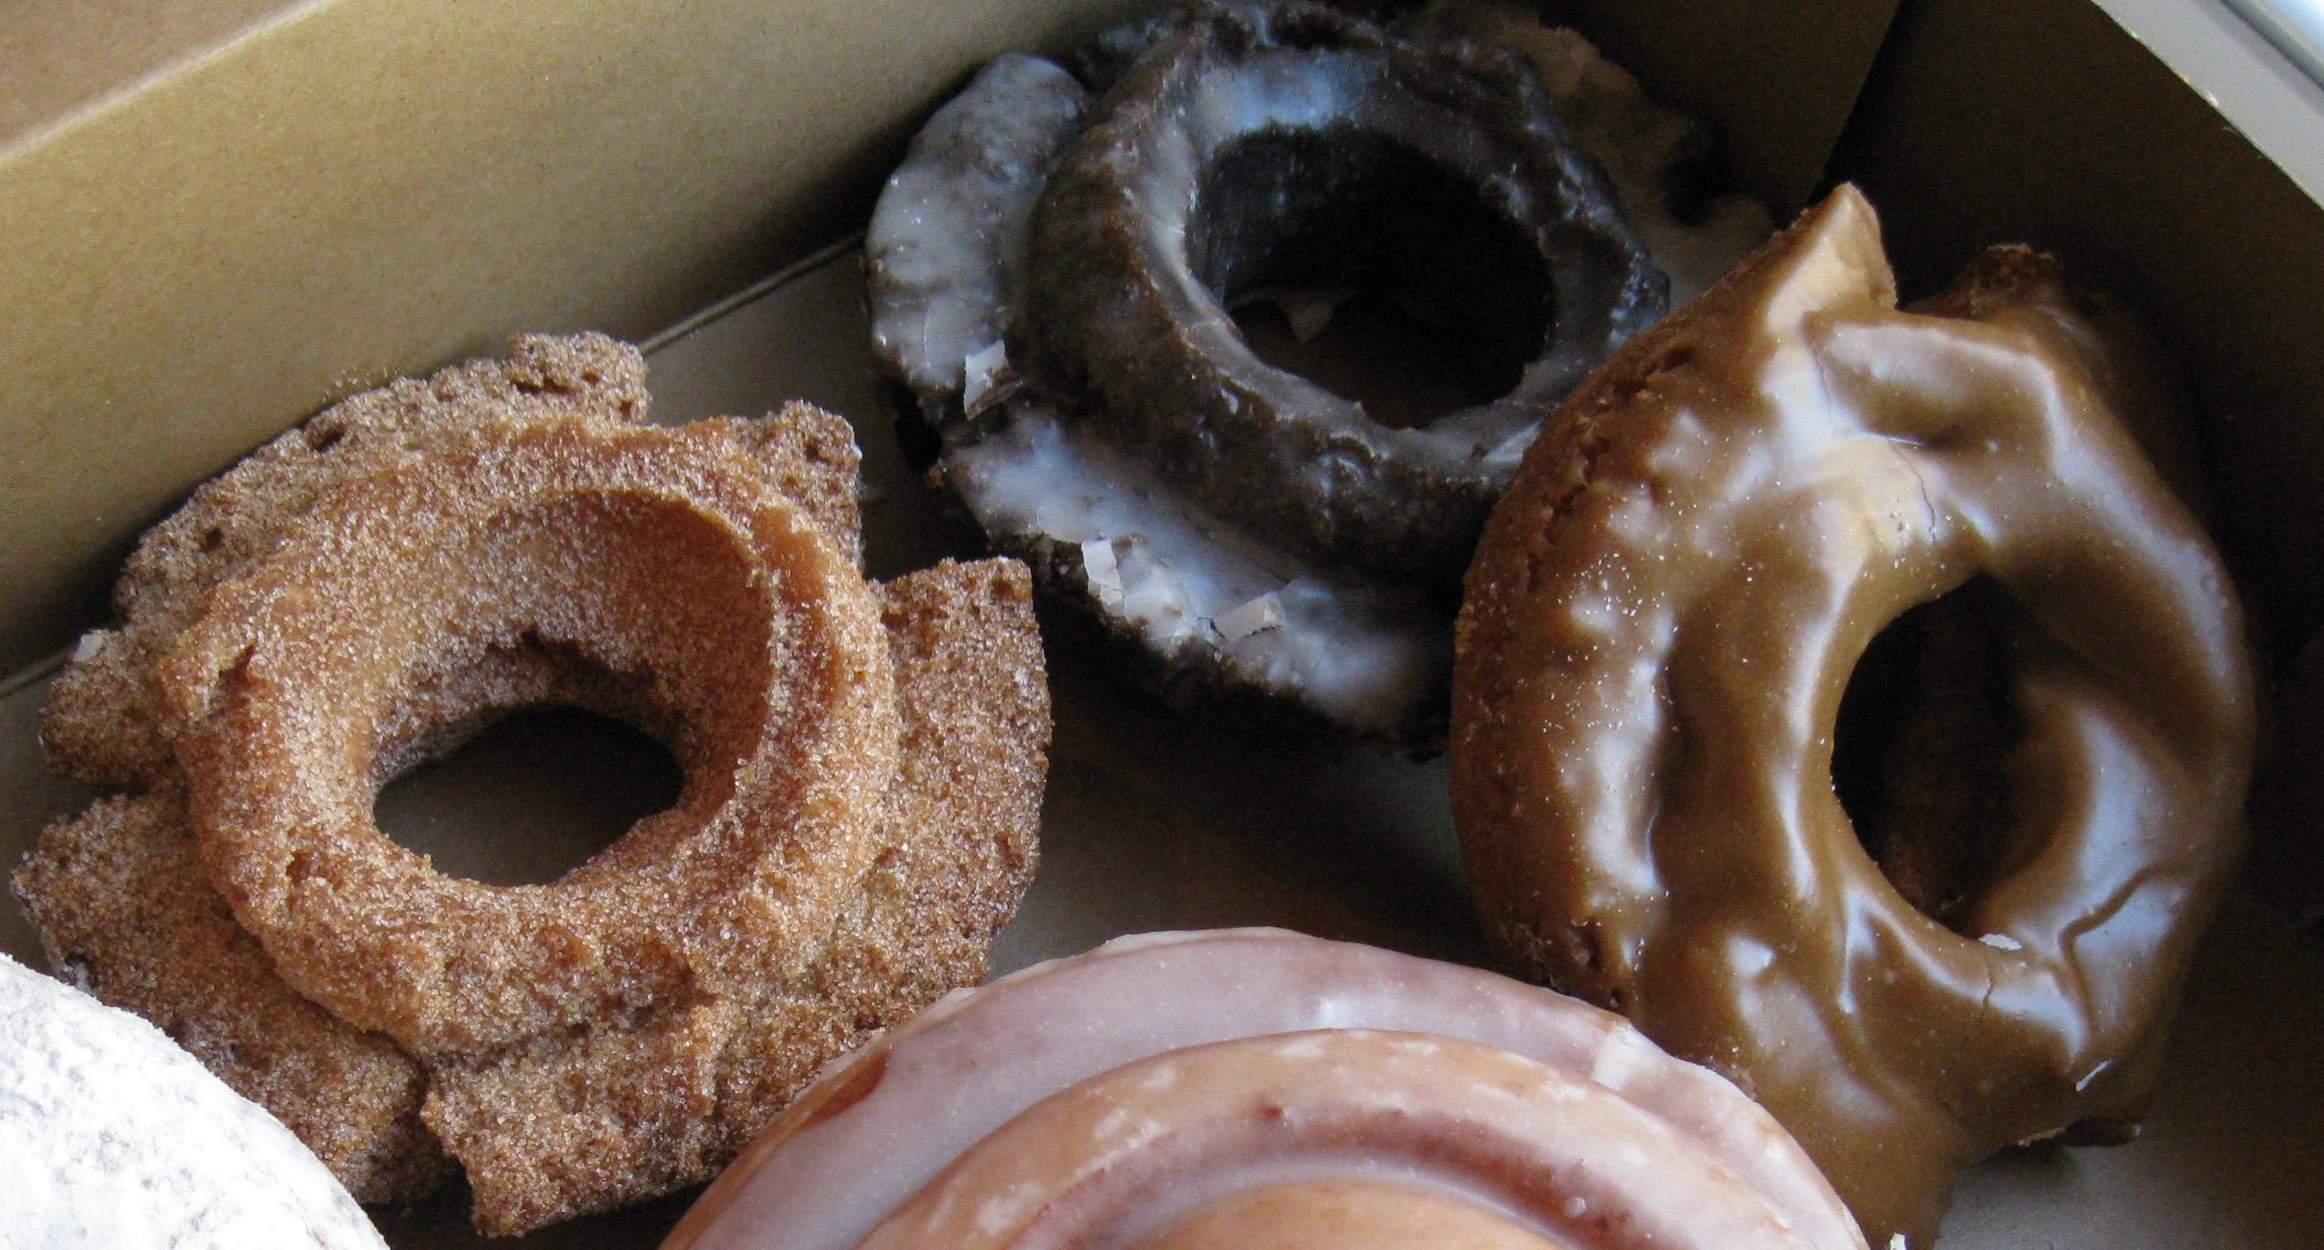 Old_fashioned_doughnuts.jpg